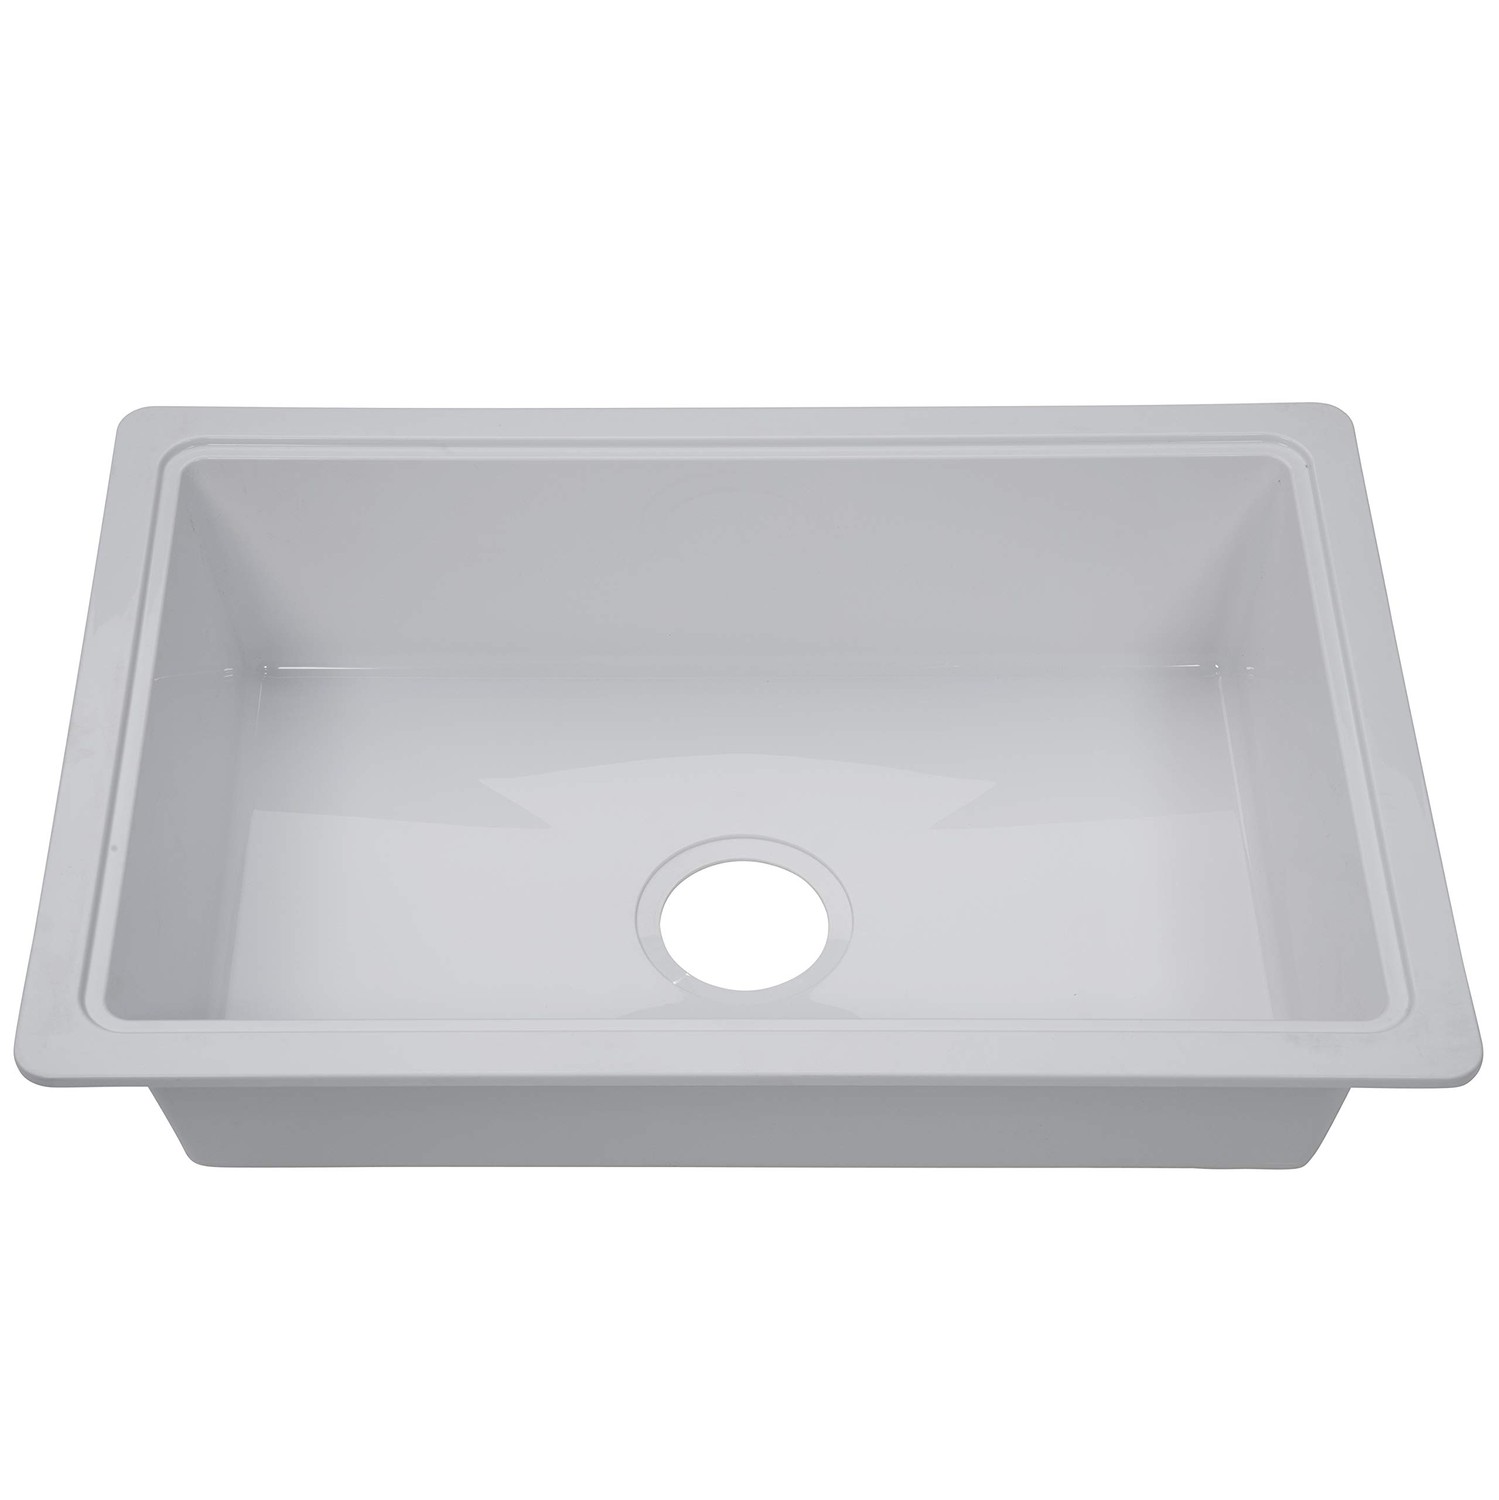 25In X 17In Single Bowl Sink - White